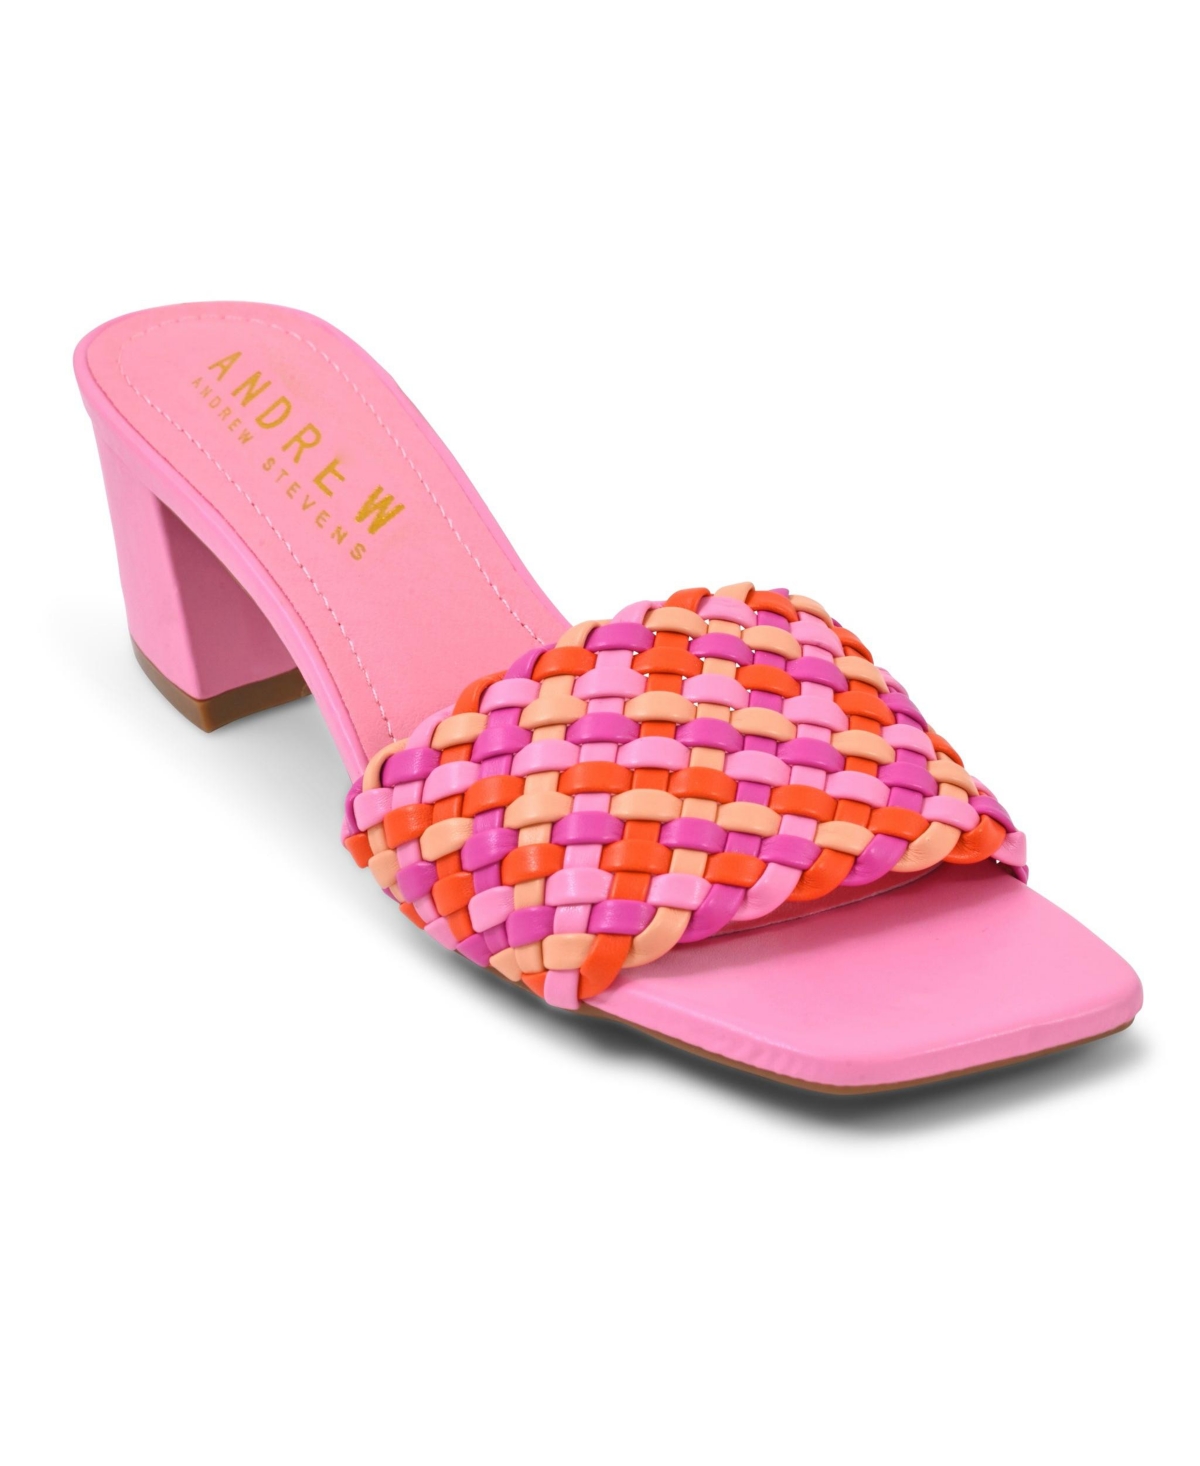 Women's Eve Sandals - Pink multi